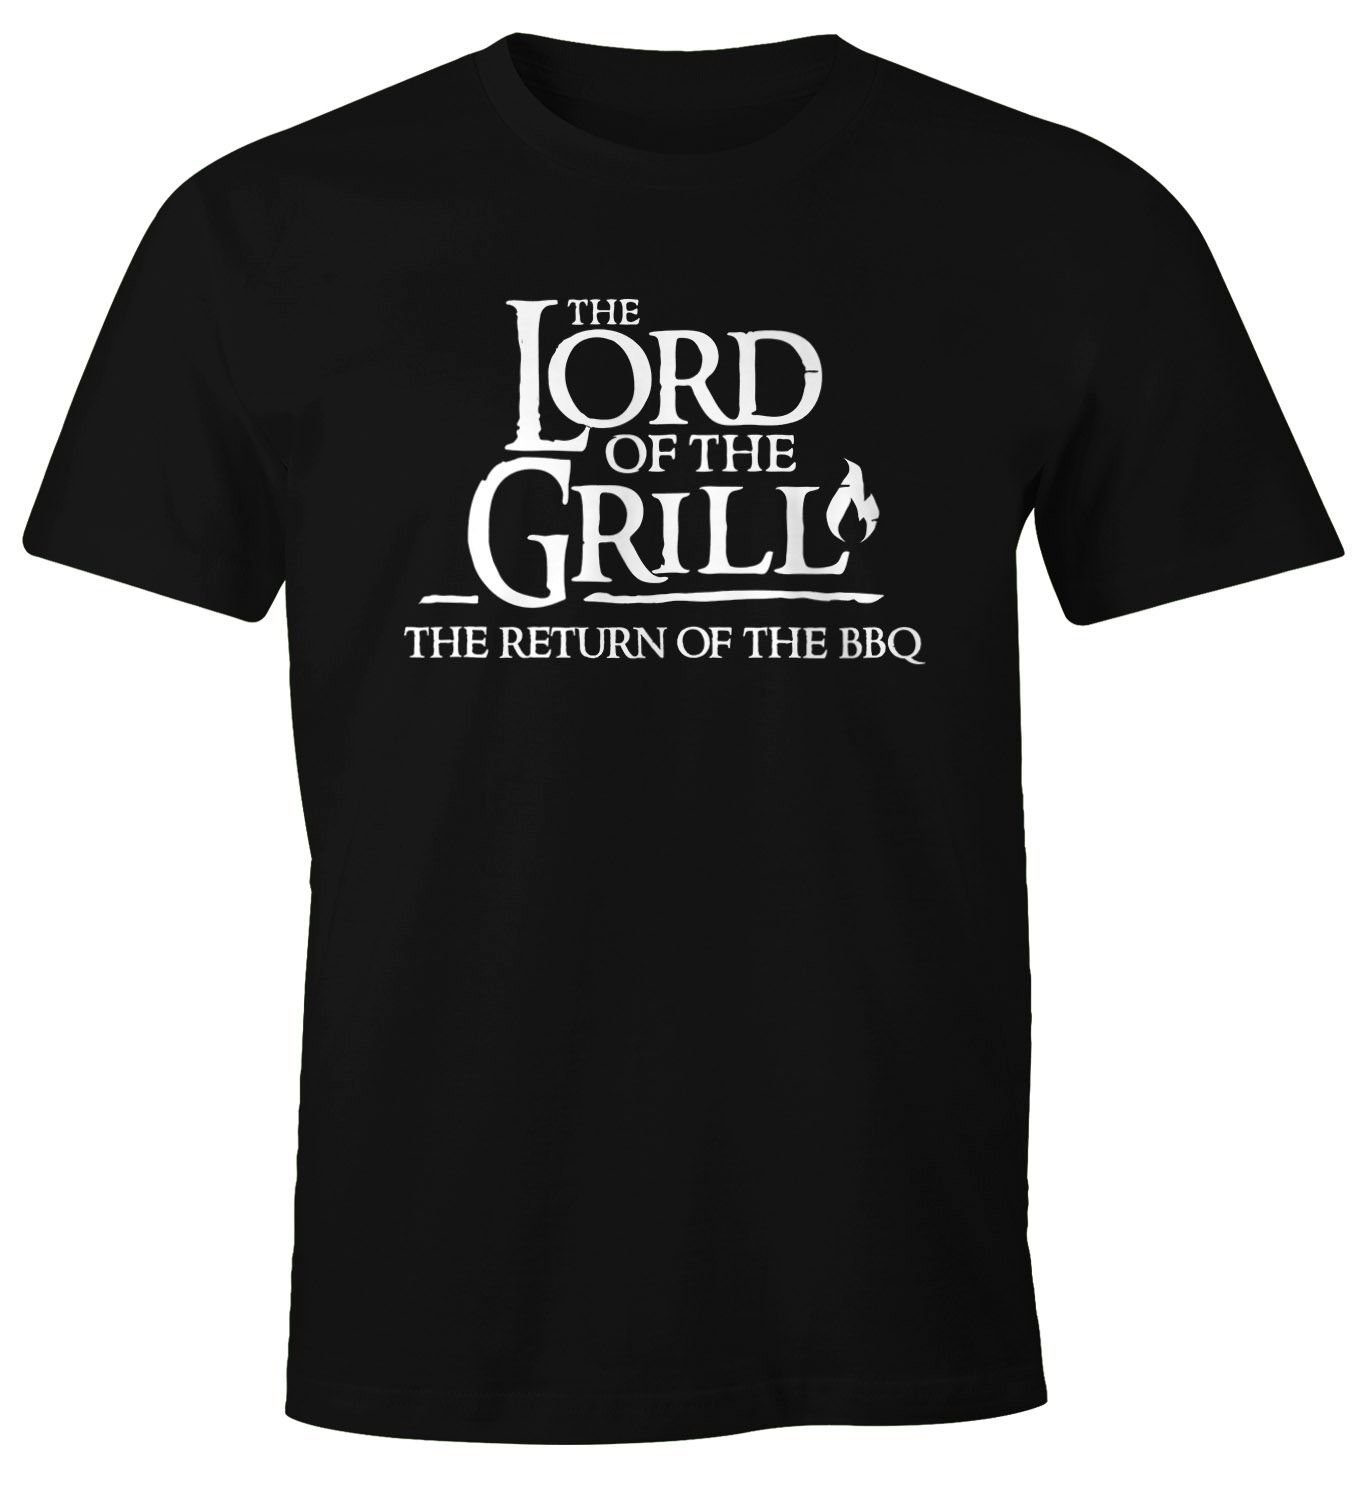 Herr Moonworks® Print-Shirt MoonWorks Herren Grill der mit of Lord Nerd Tee the BBQ Fantasy T-Shirt The Grille Print Fun-Shirt